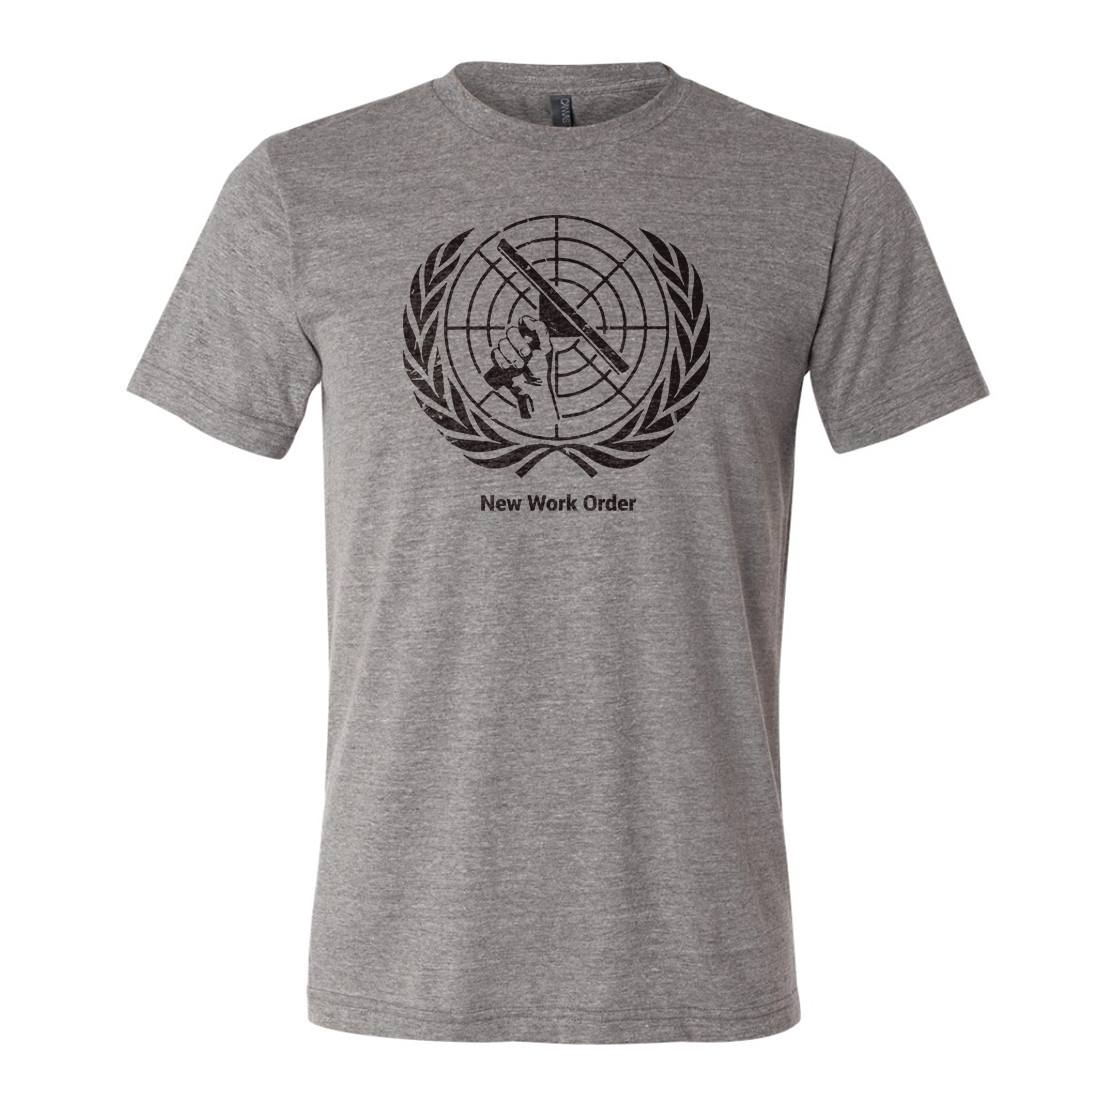 Chris T. Wilson T-Shirt - New Work Order - Size XXX-Large - Full View